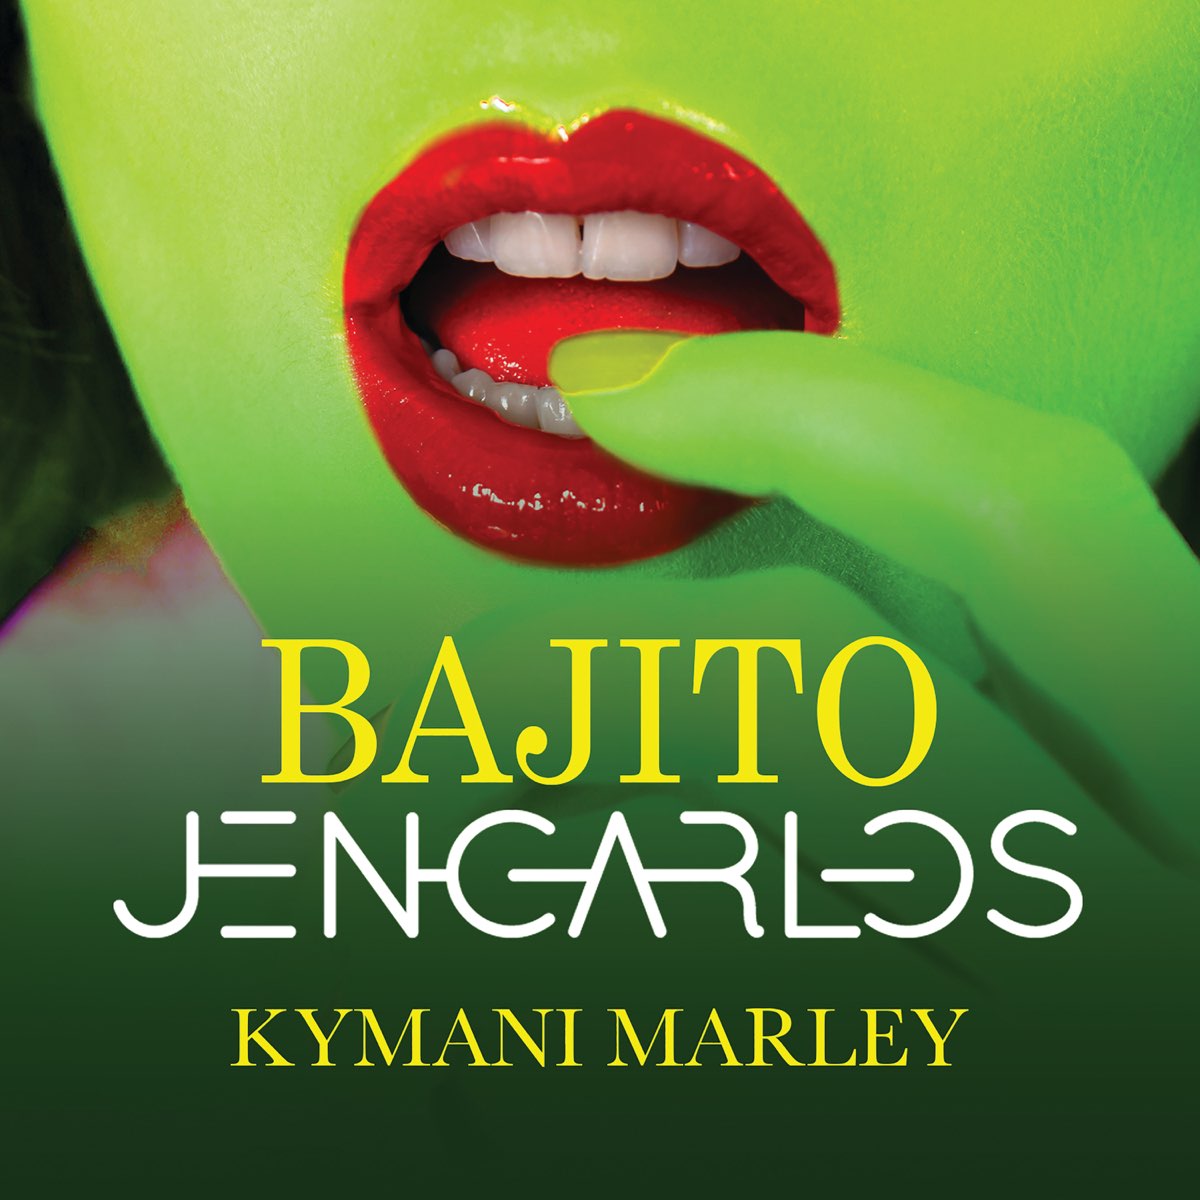 Bajito (feat. Ky-Mani Marley) - Single par Jencarlos sur Apple Music